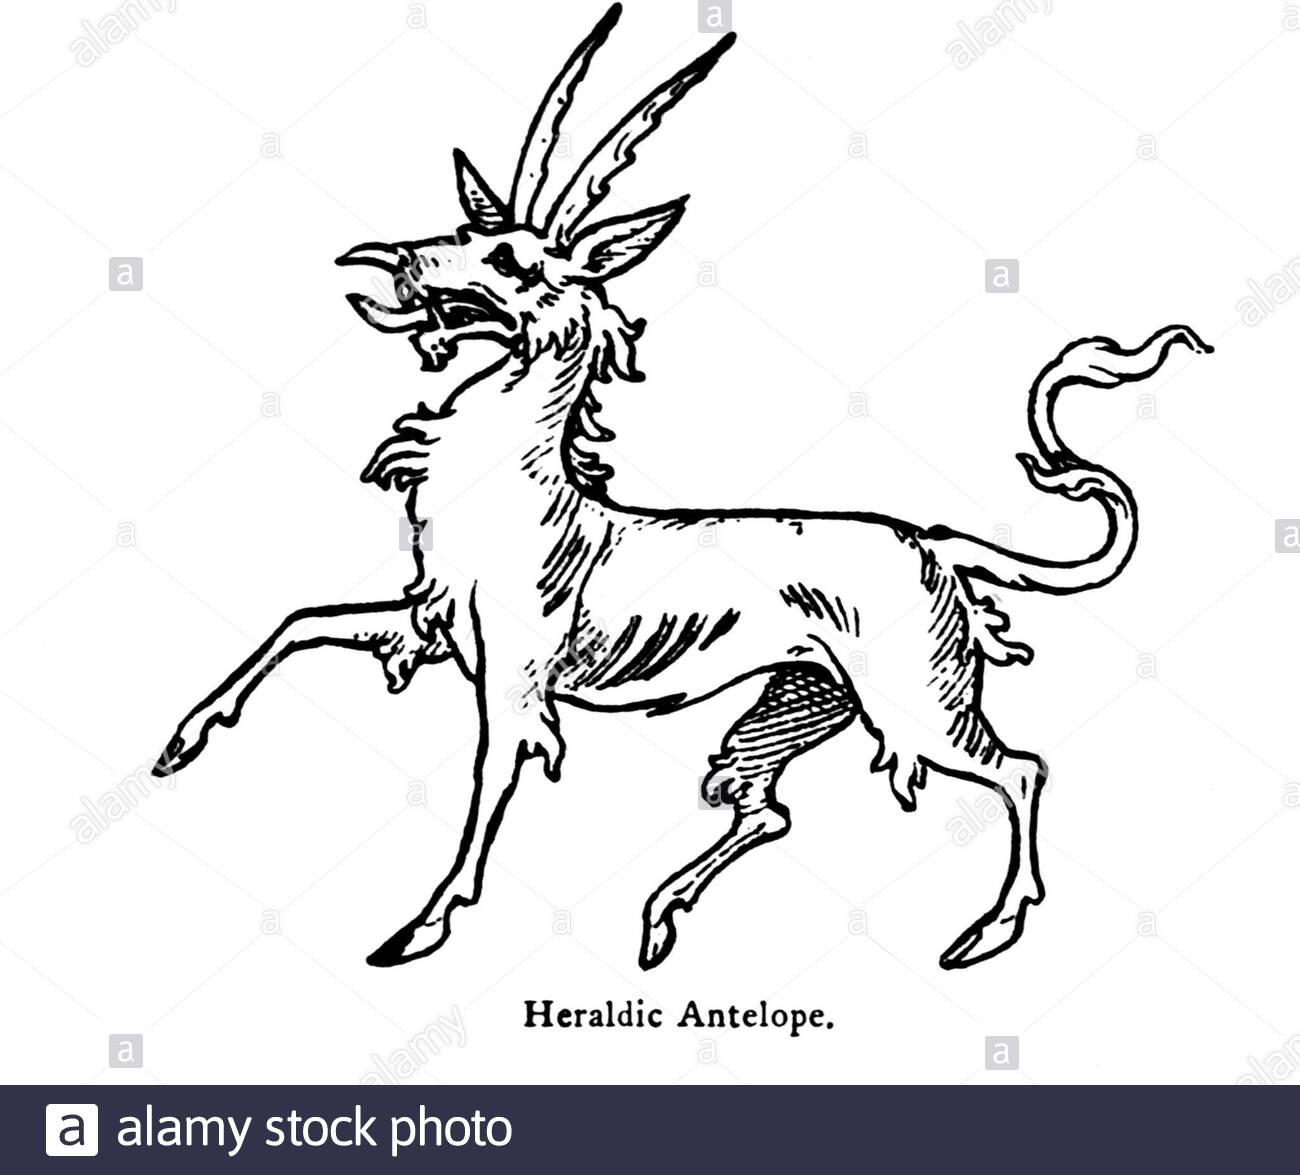 Heraldic Antelope, vintage illustration from 1900 Stock Photo